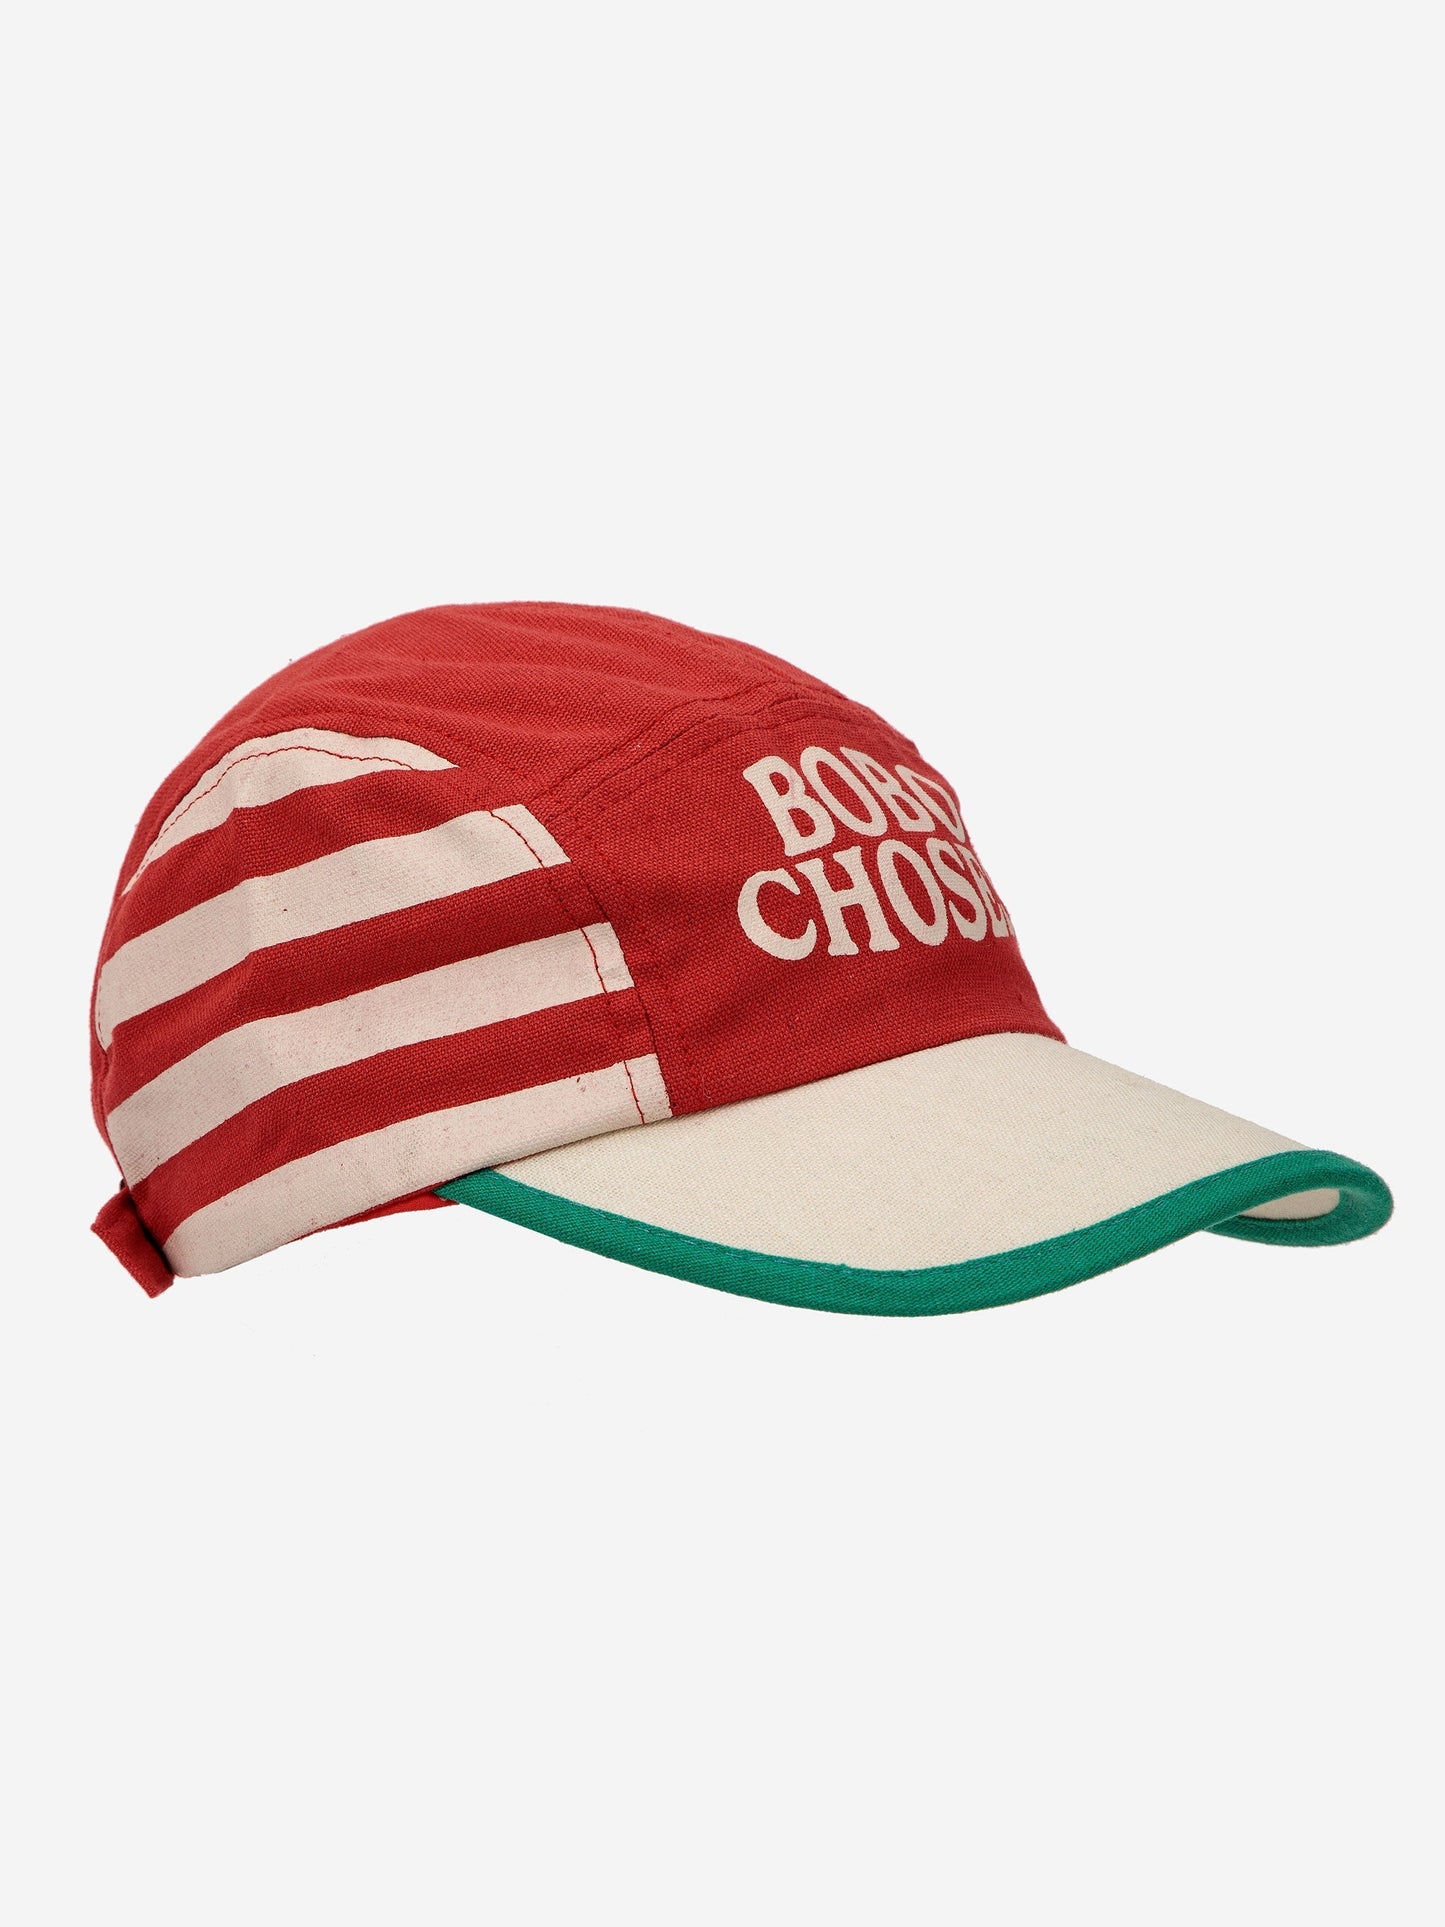 Bobo Choses Red Stripes cap